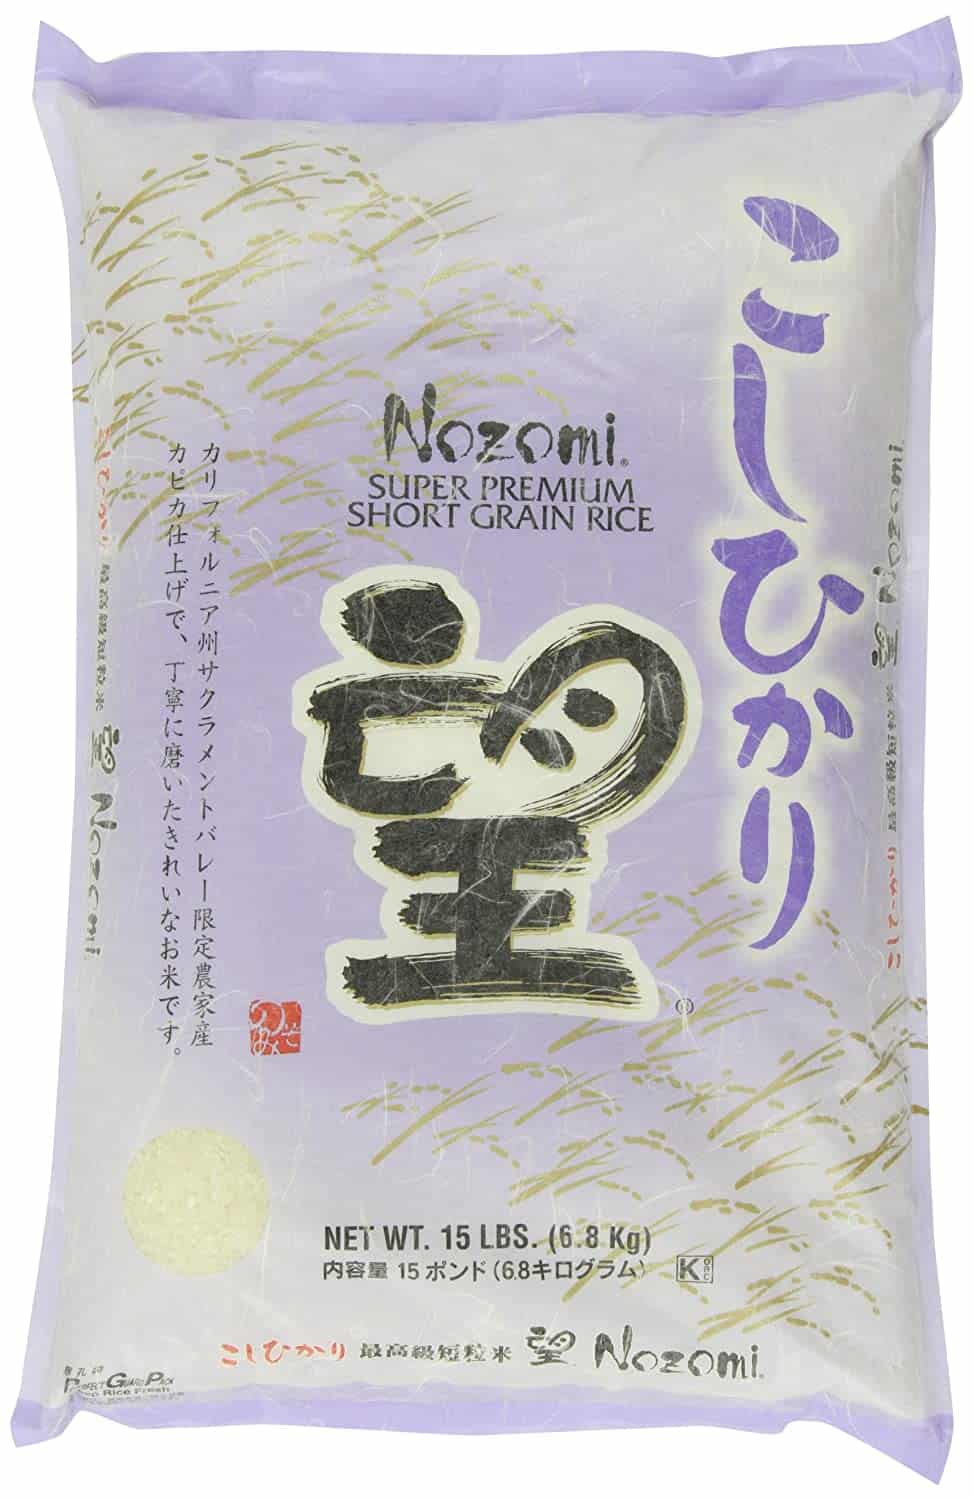 Nozomi short grain sushi rice